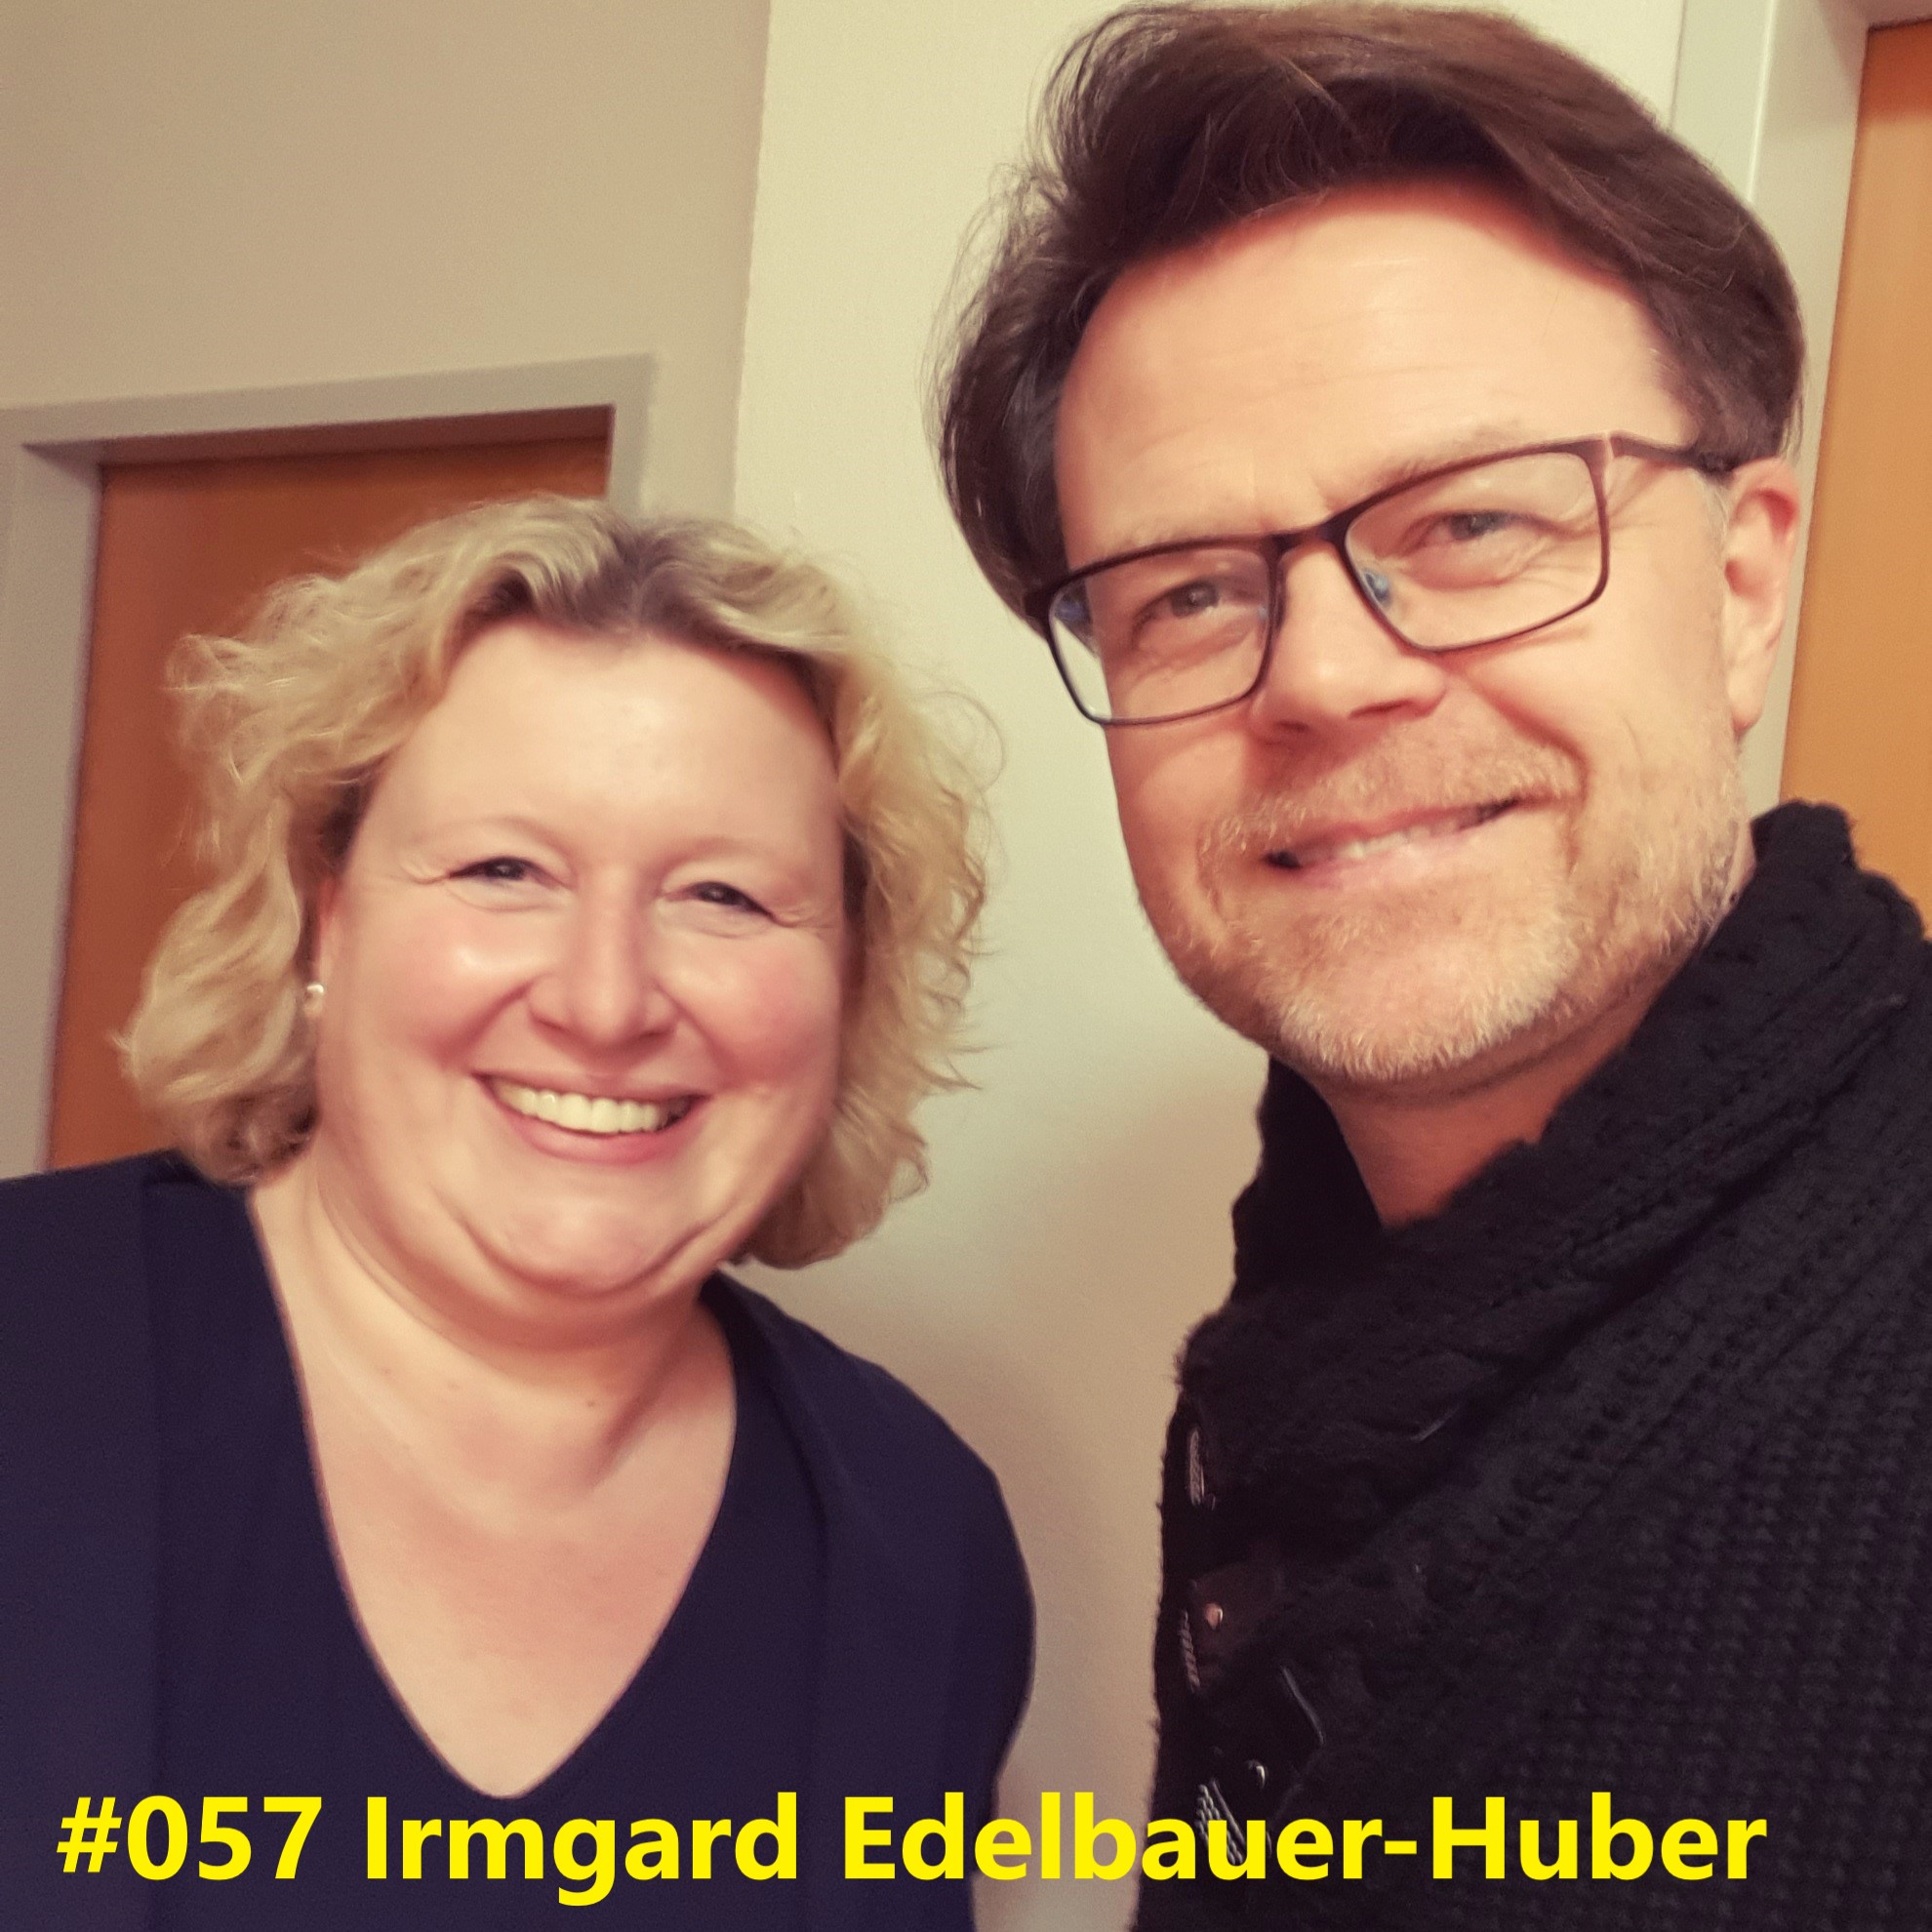 Irmgard Edelbauer-Huber